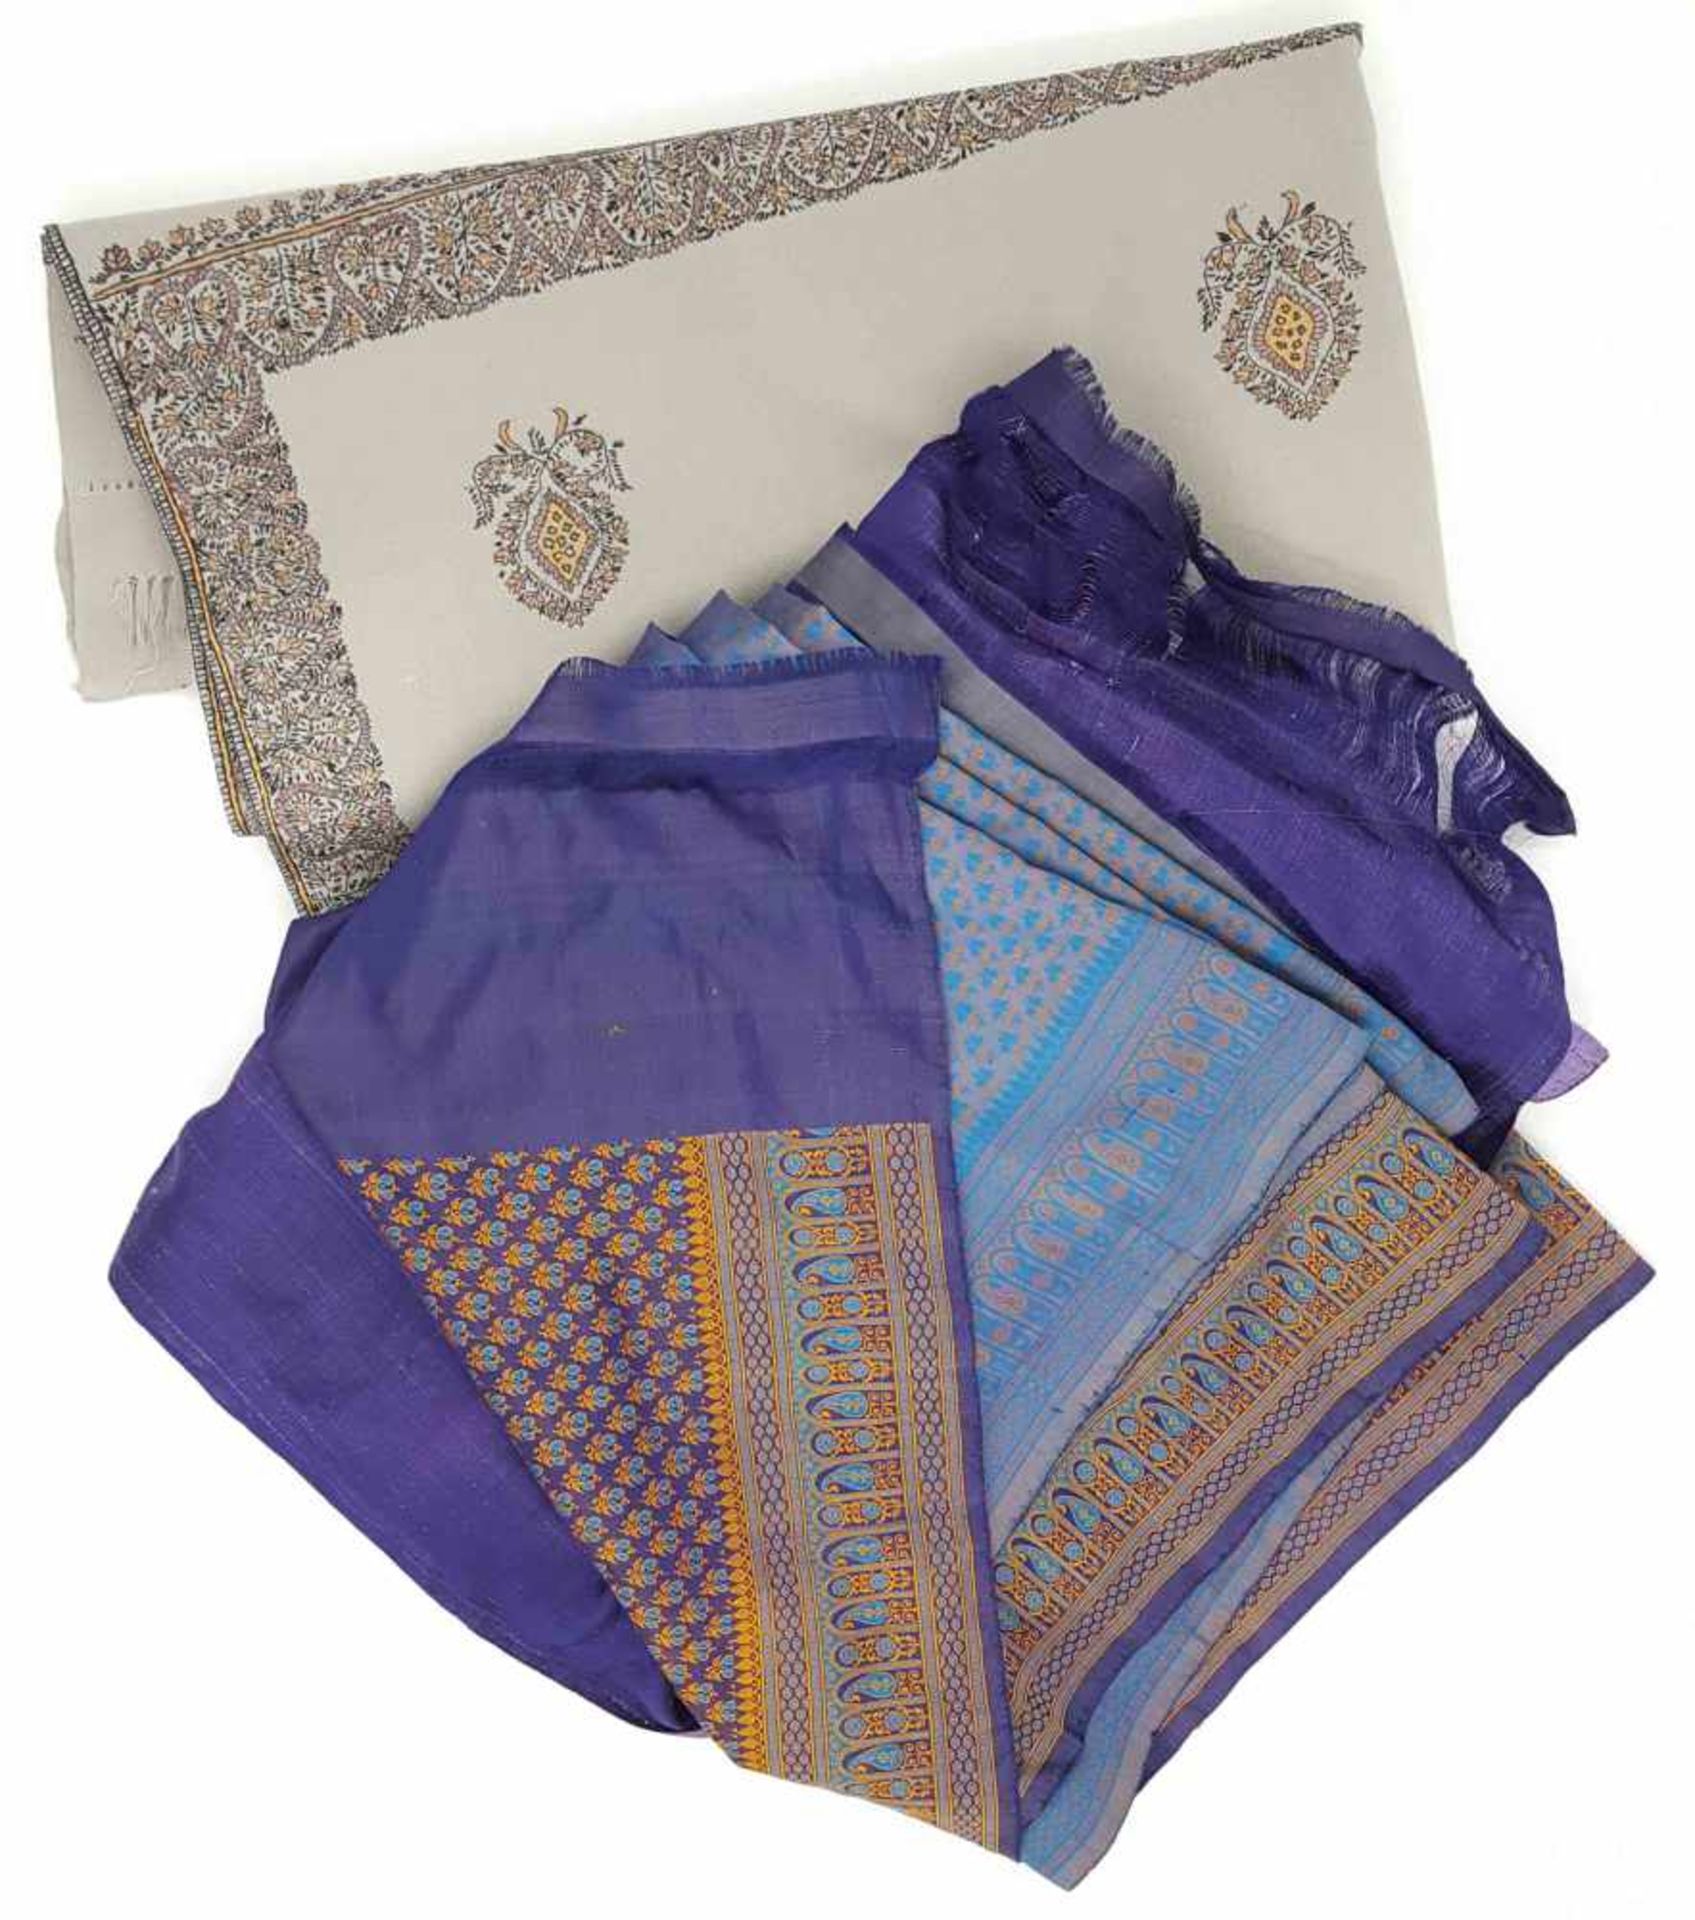 2 textiles. A silk sarong and a Pashmina scarf.